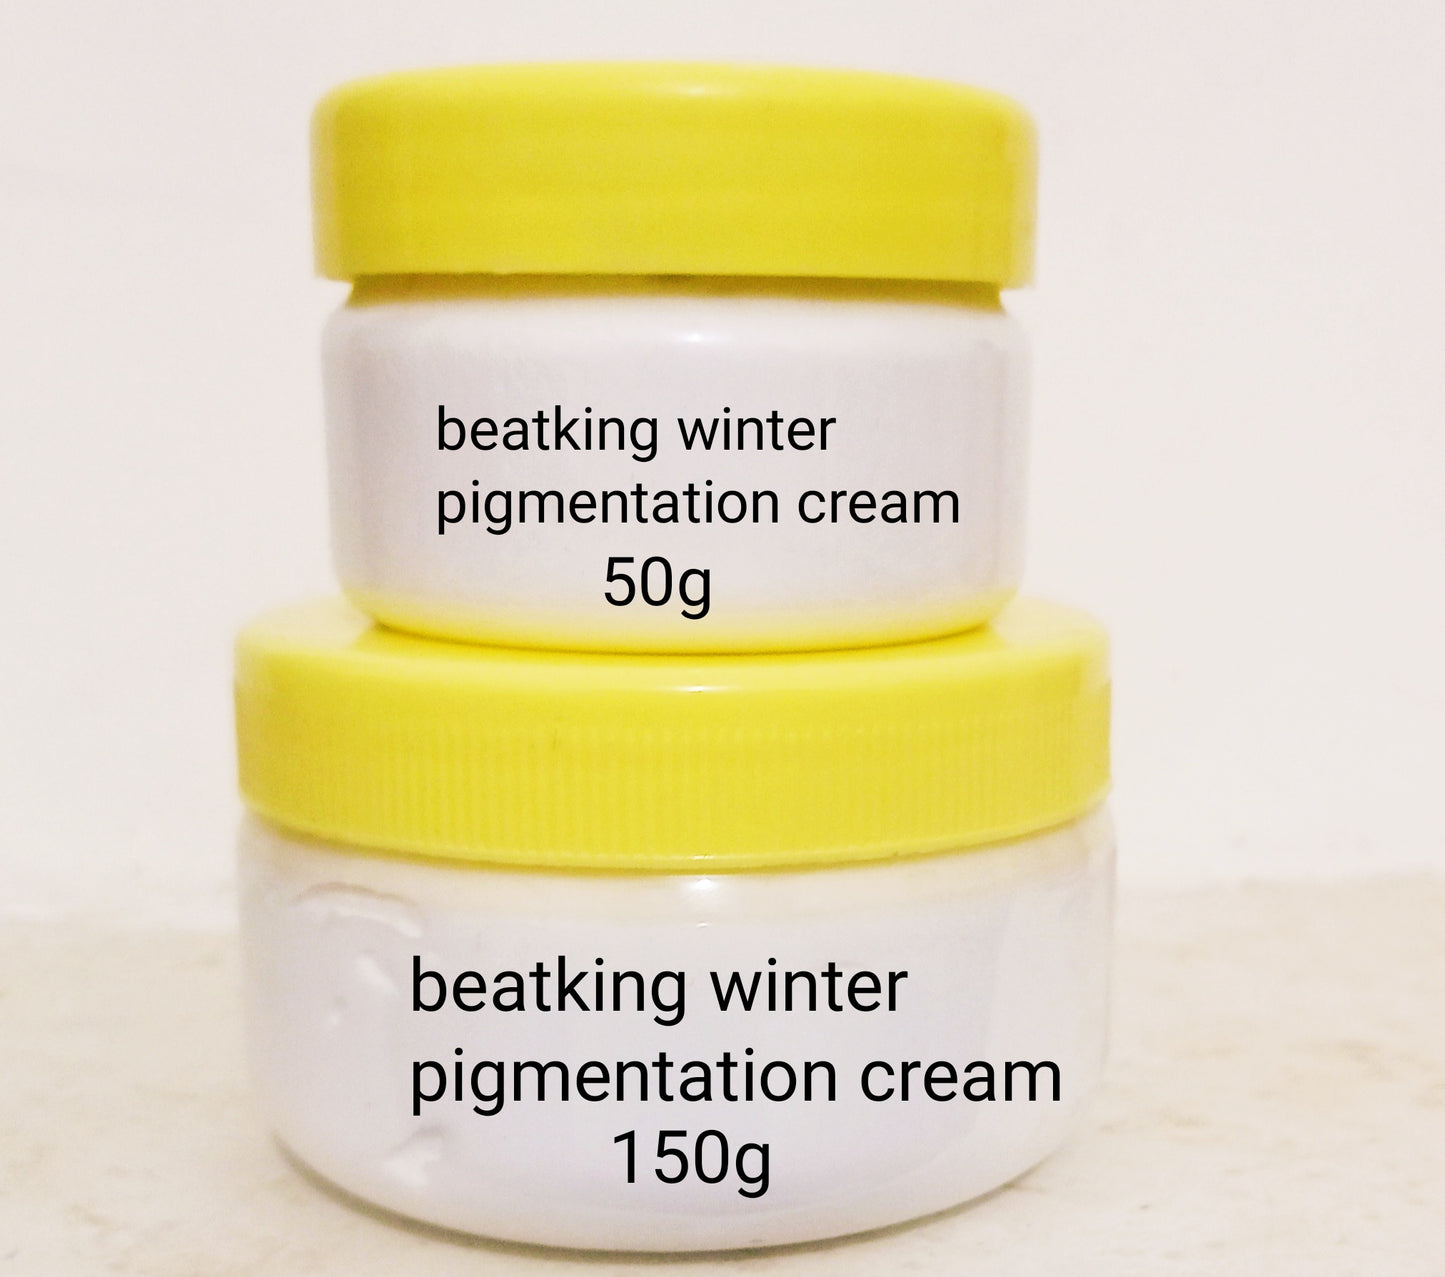 Beatking winter pigmentation cream